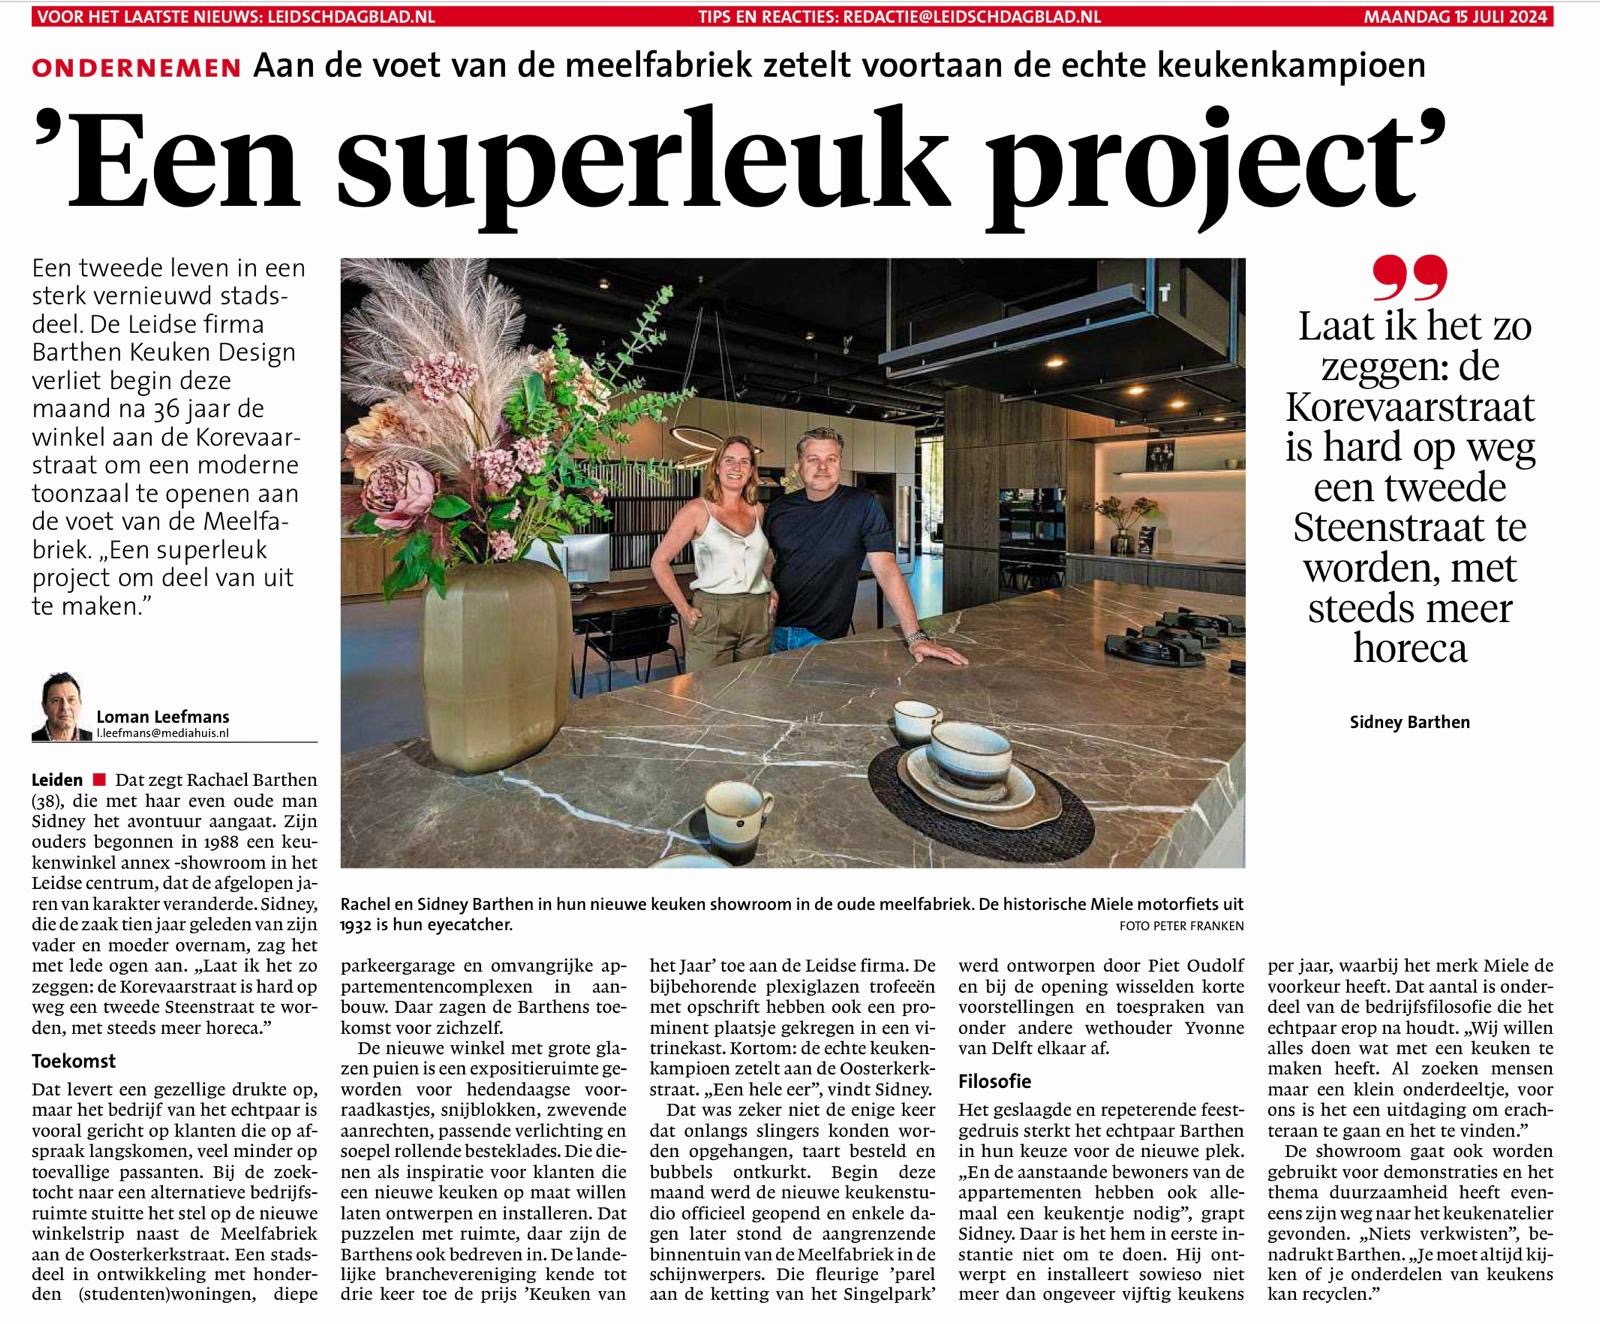 Leidsch Dagblad Een super project